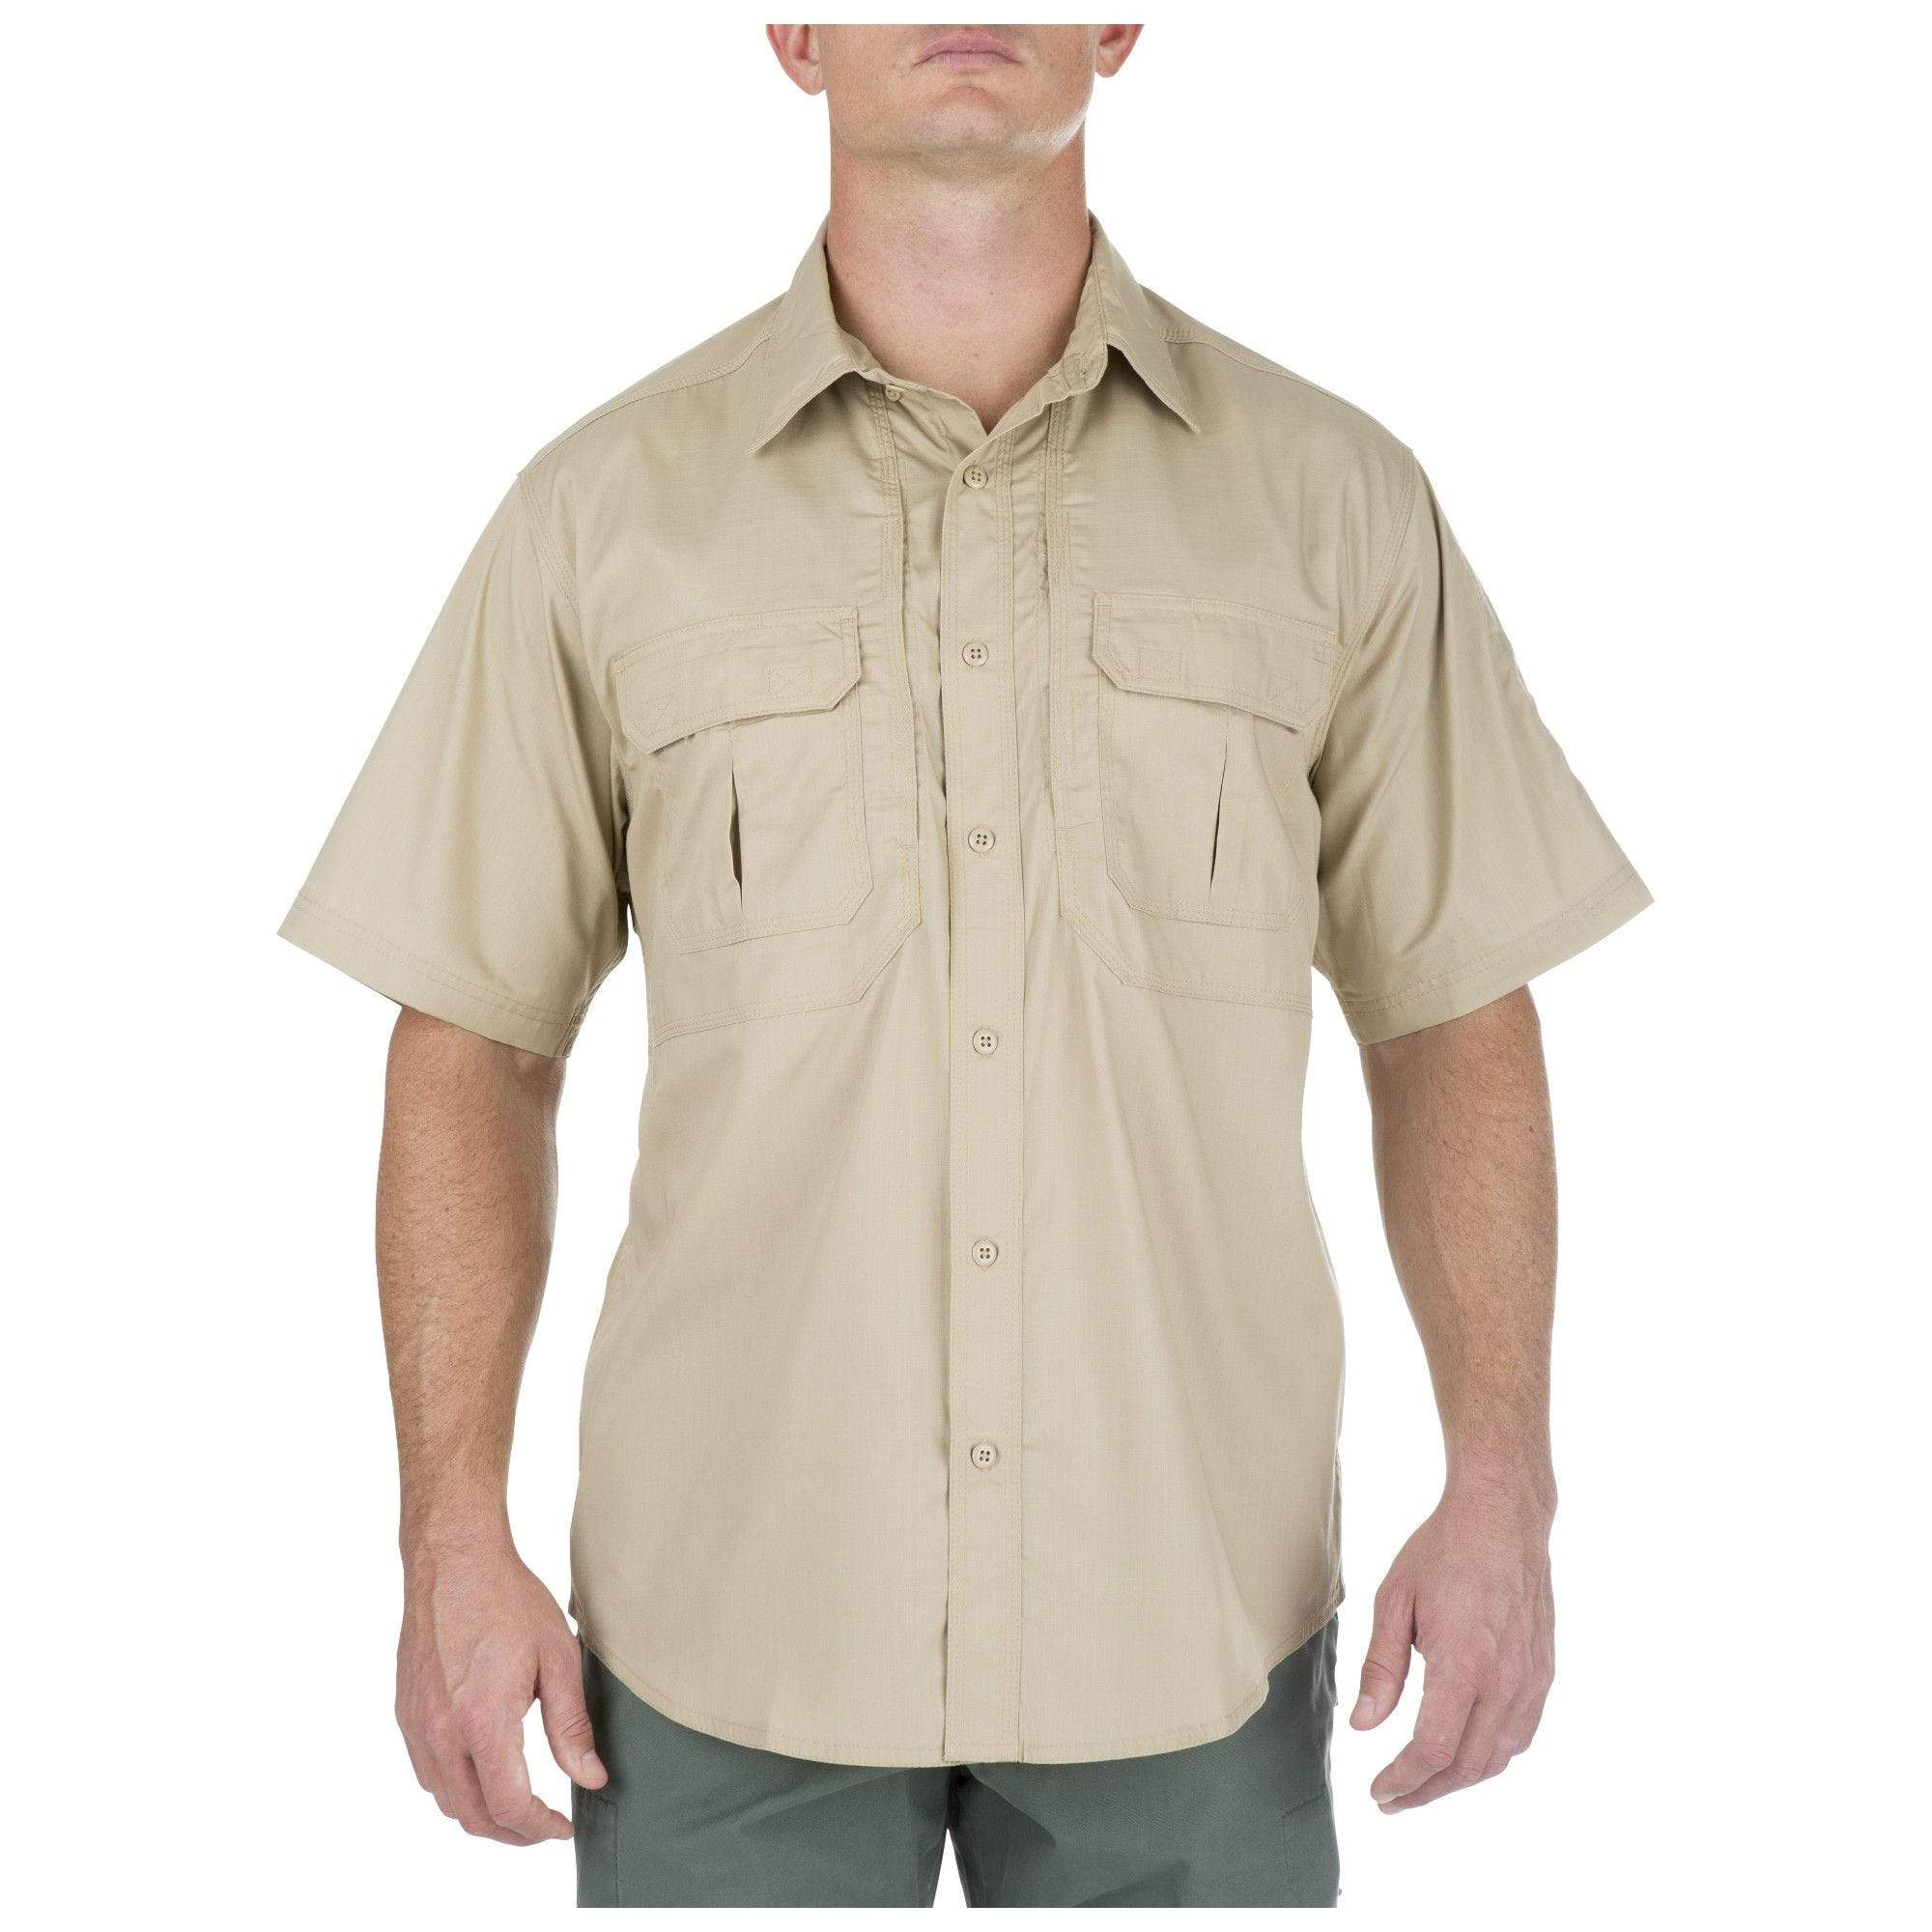 Camisas de Hombre 5.11 - CSI Tactical